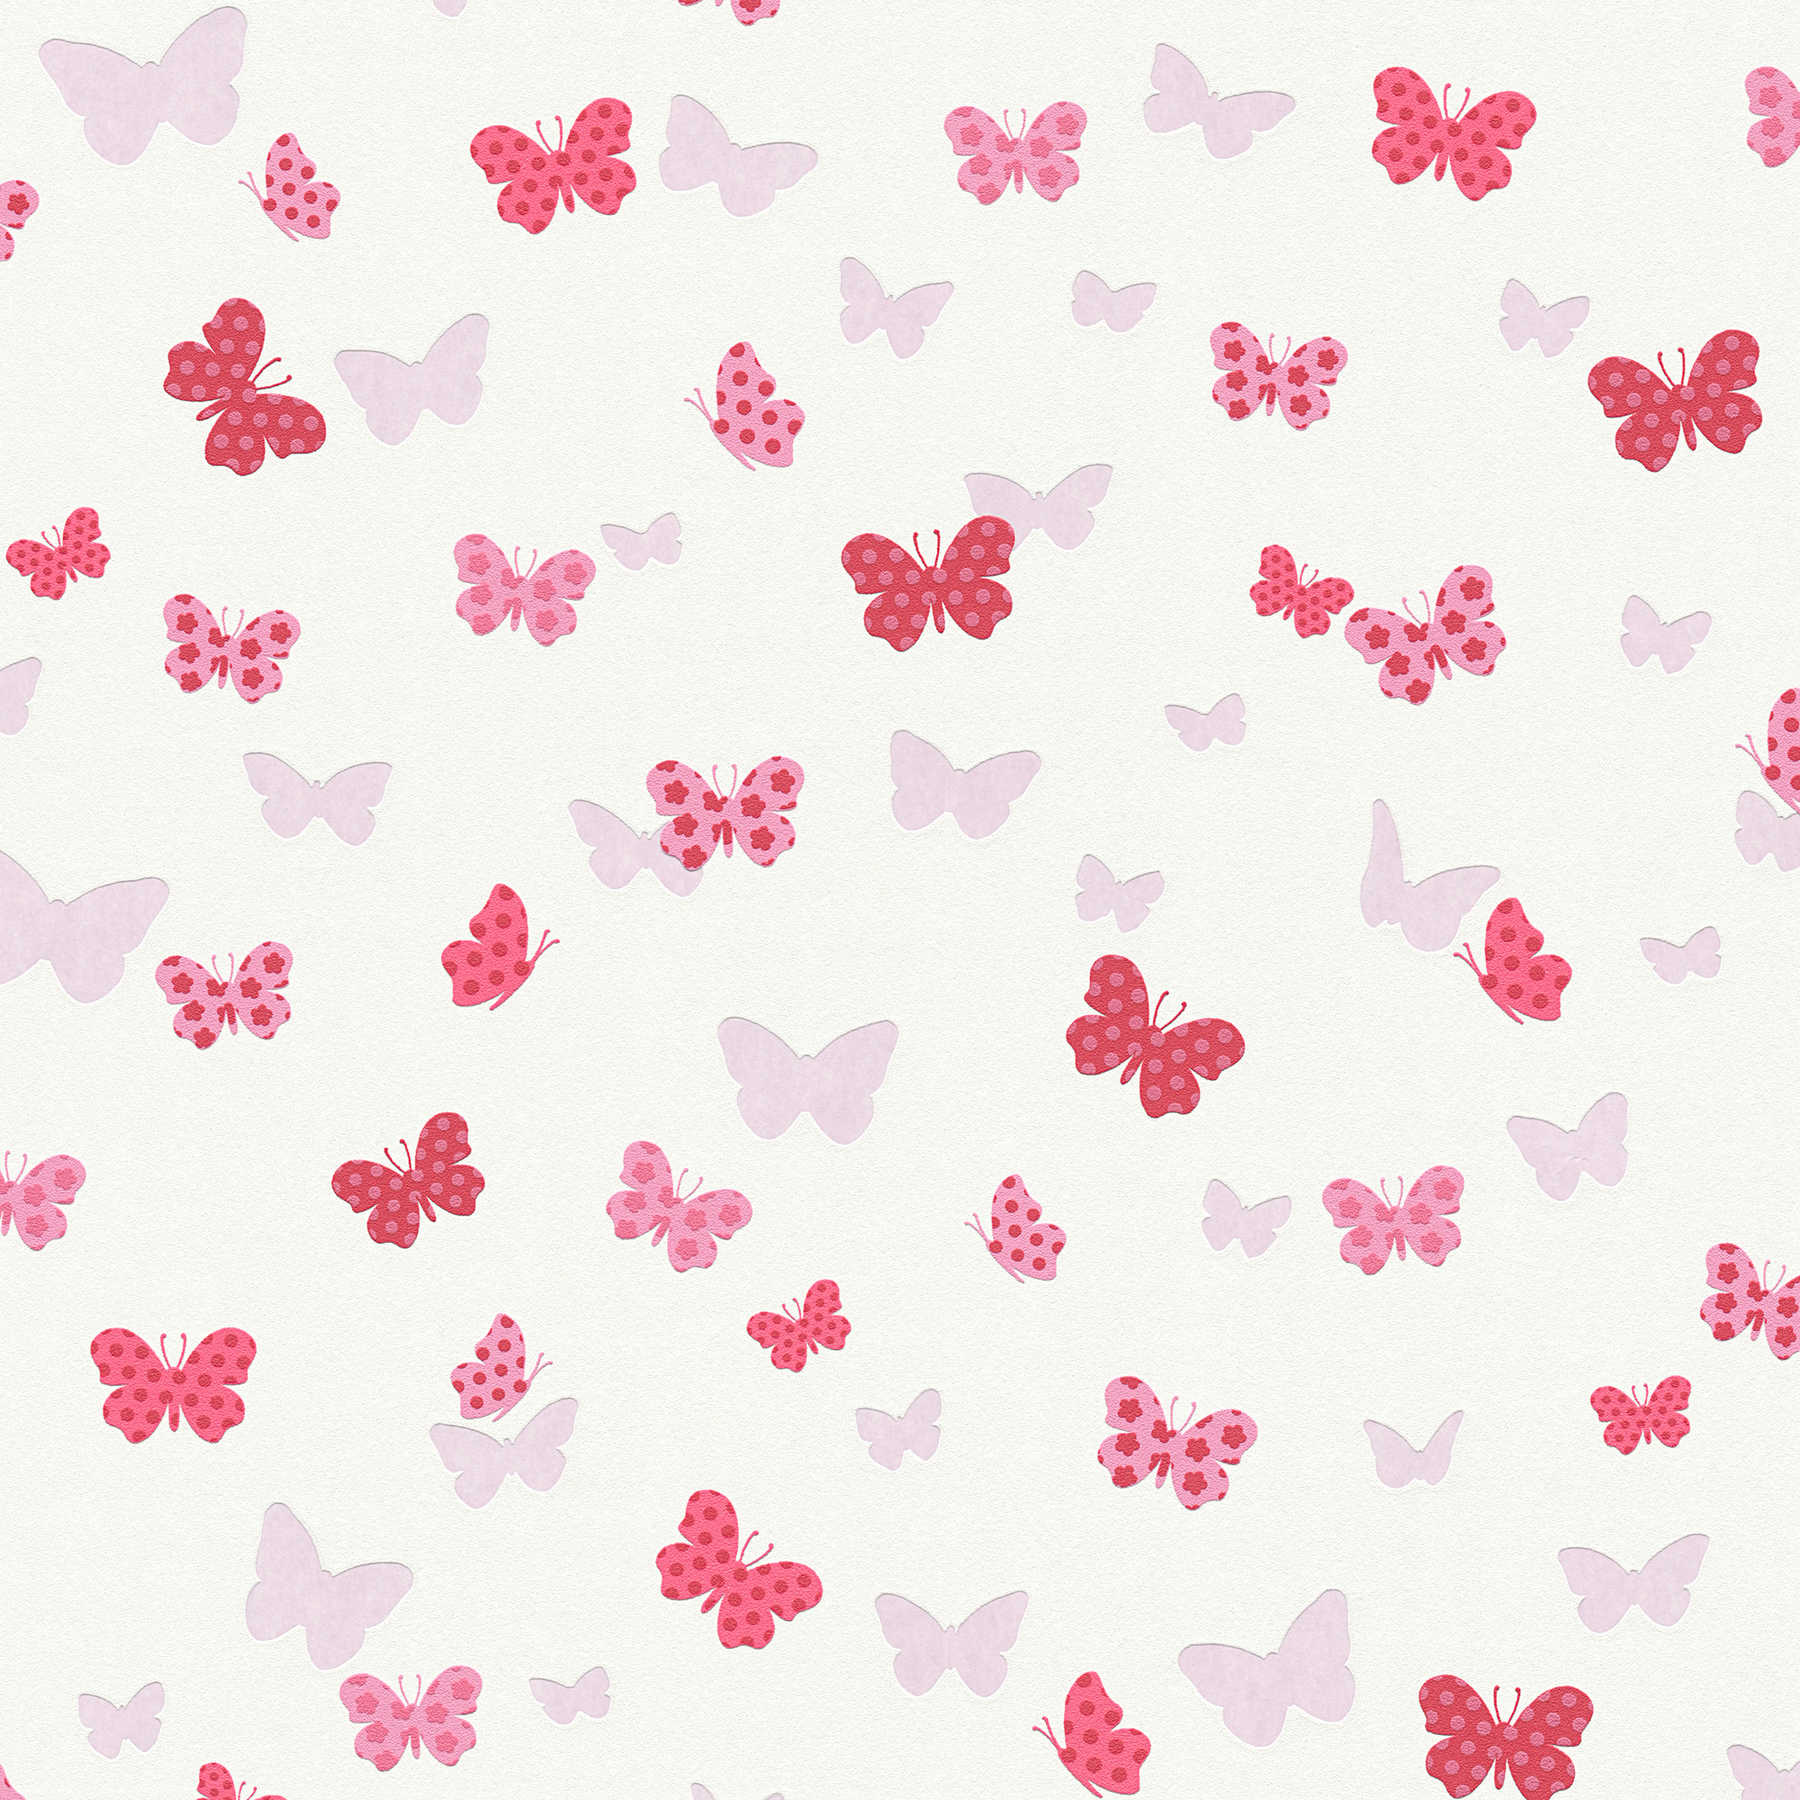 Vlinder patroon voor kinderkamer - wit, rood, roze
